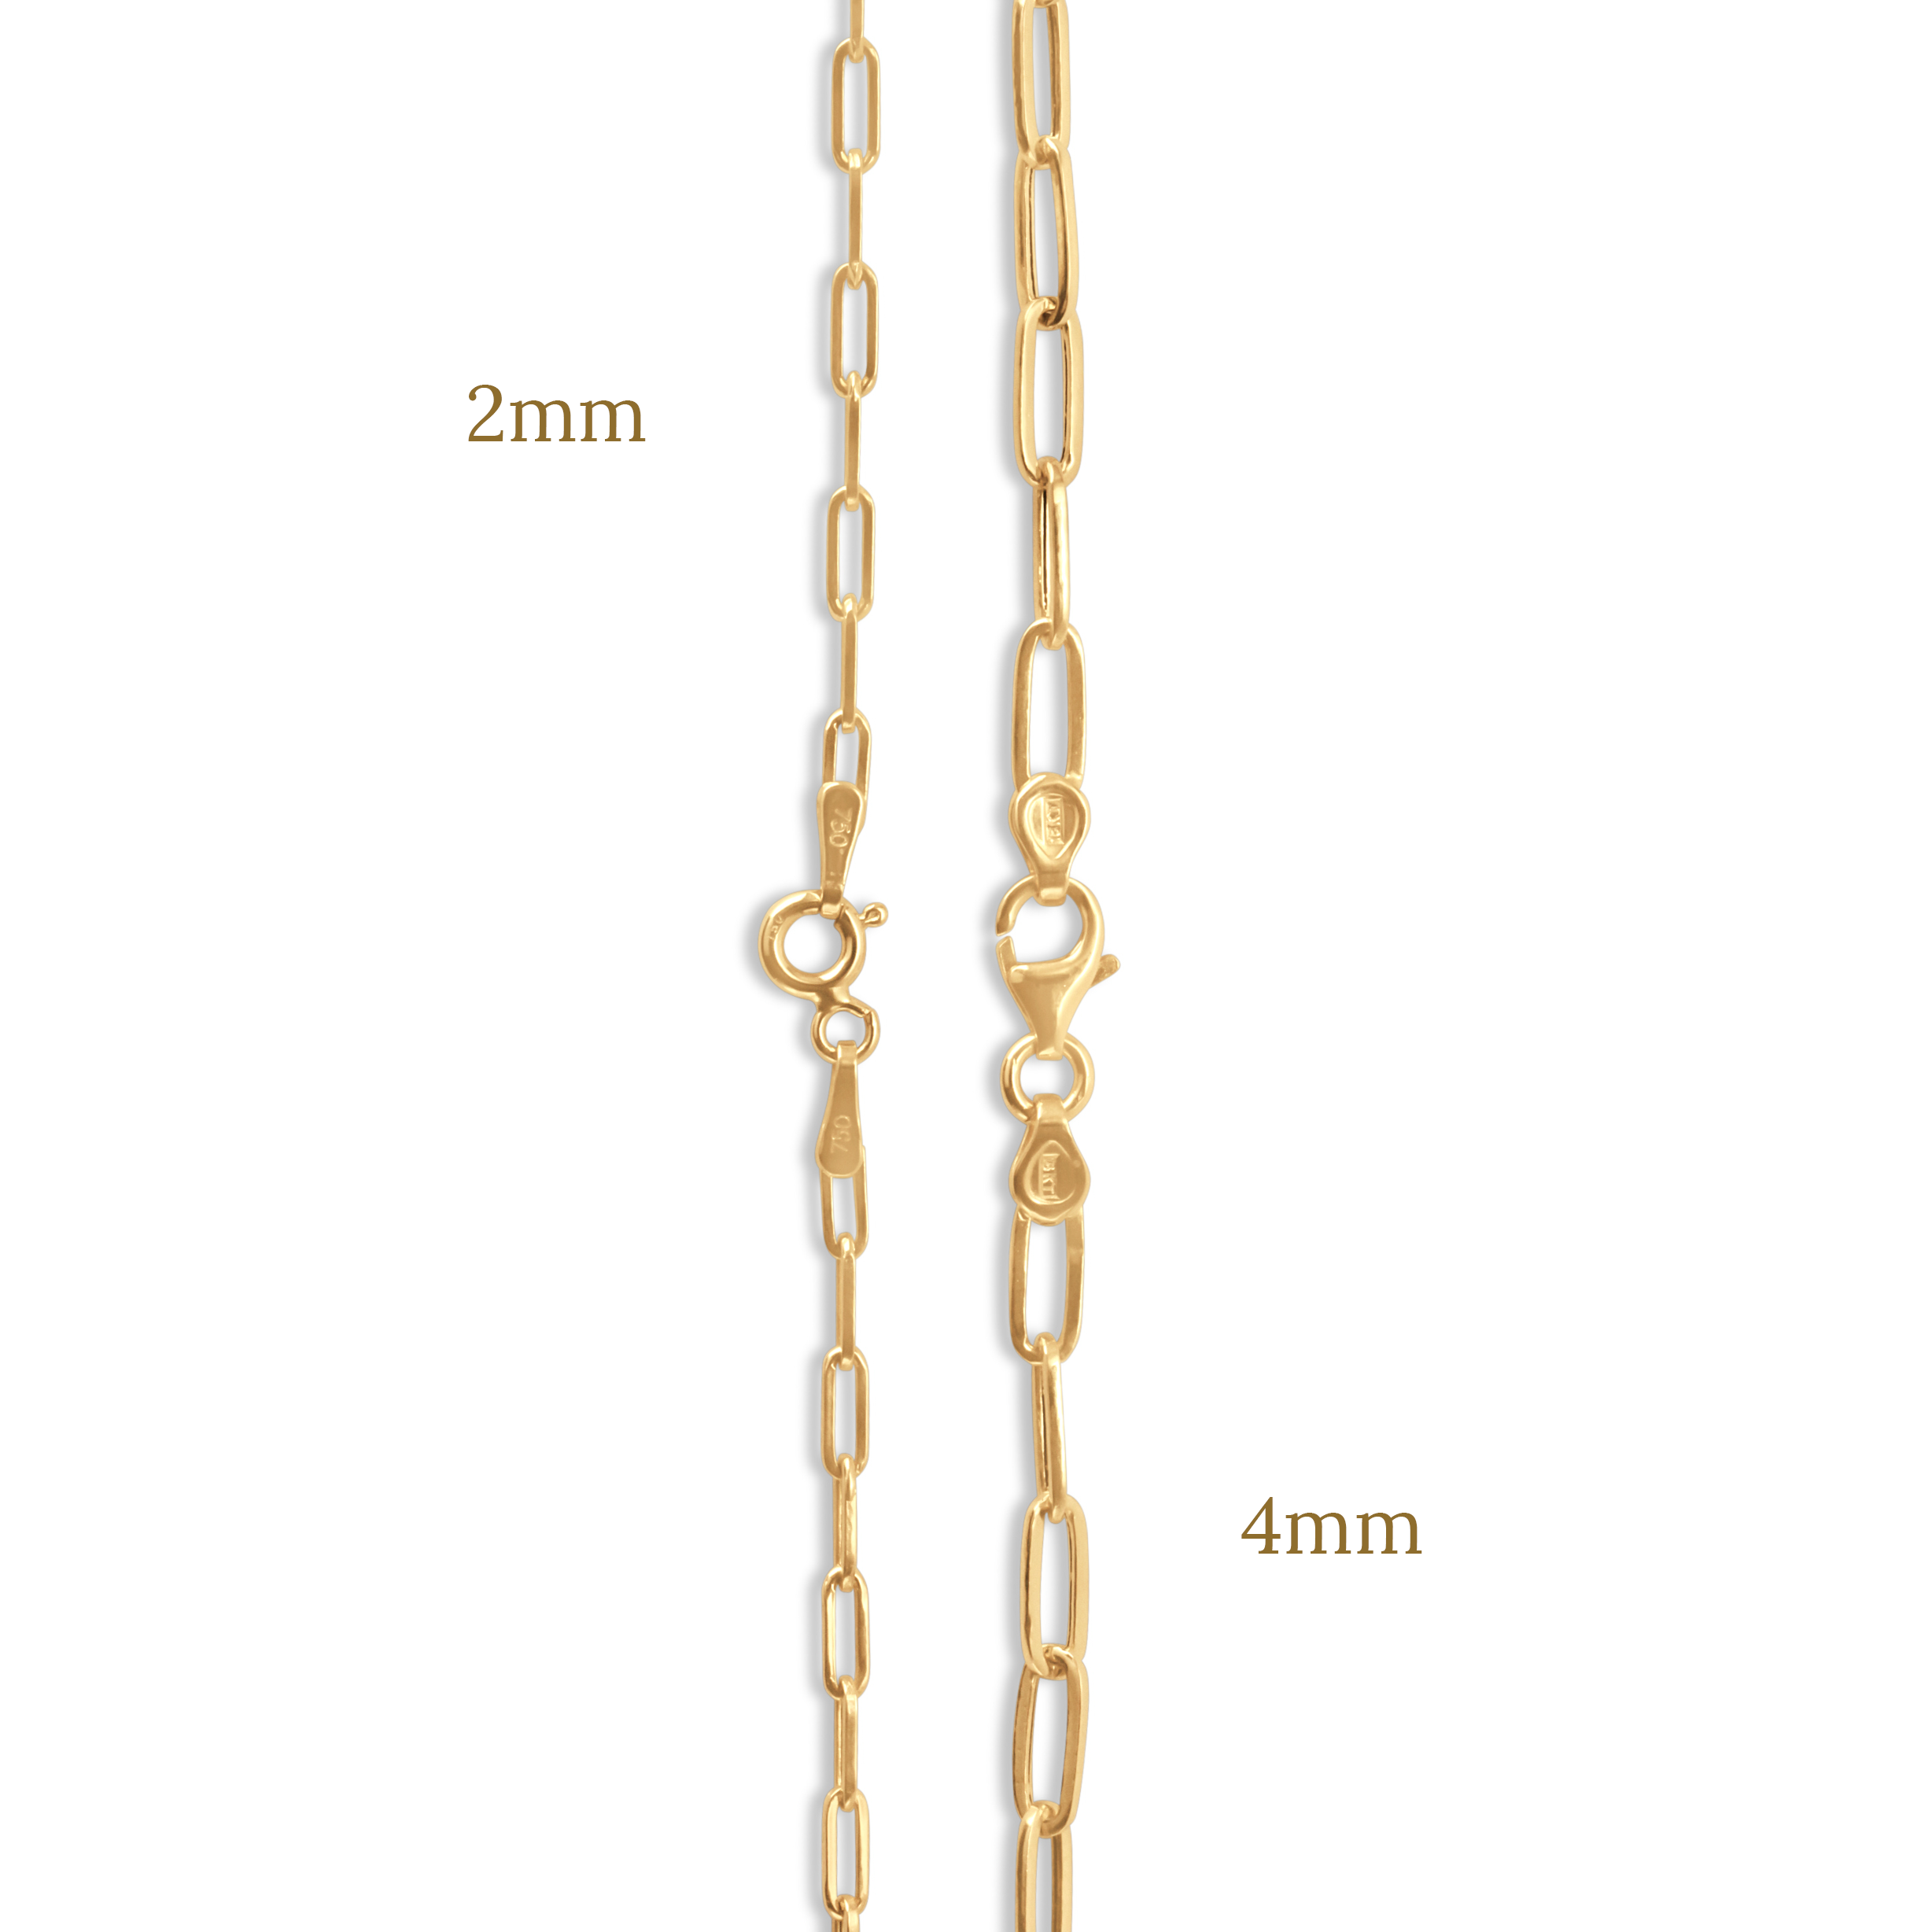 Gold link paper clip chain clasp size comparison